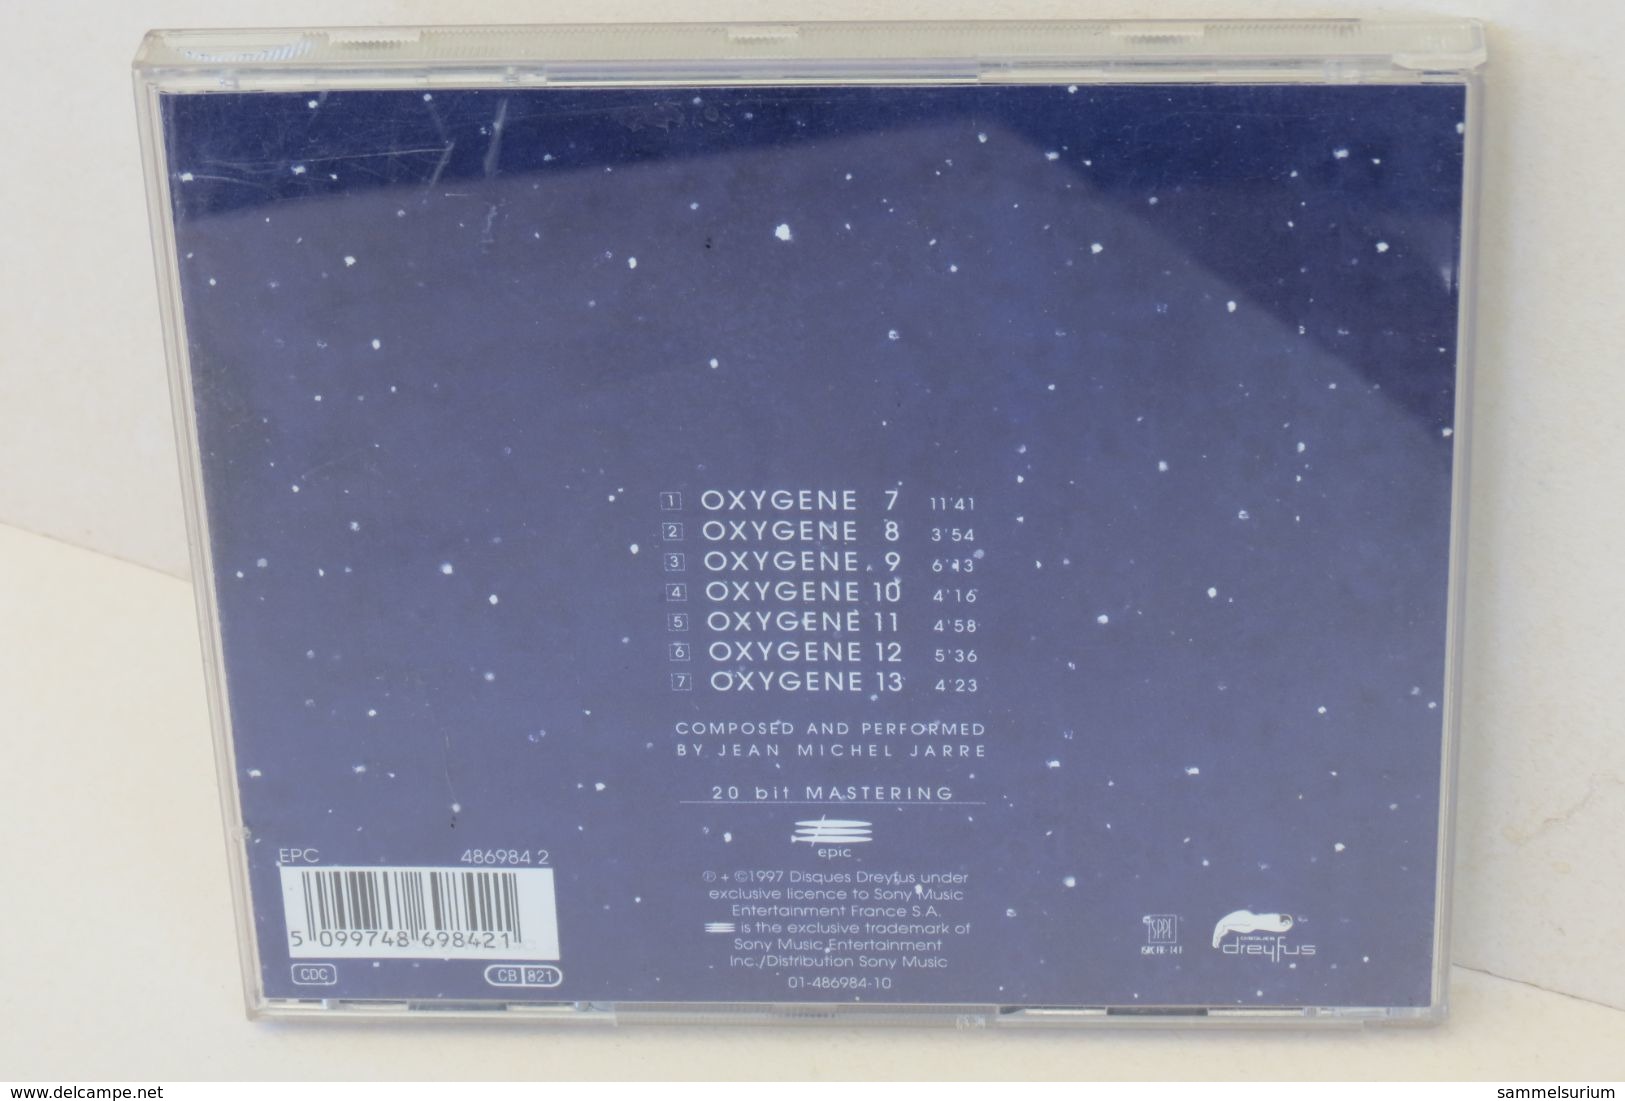 CD "Jean Michel Jarre" Oxygene 7-13 - New Age